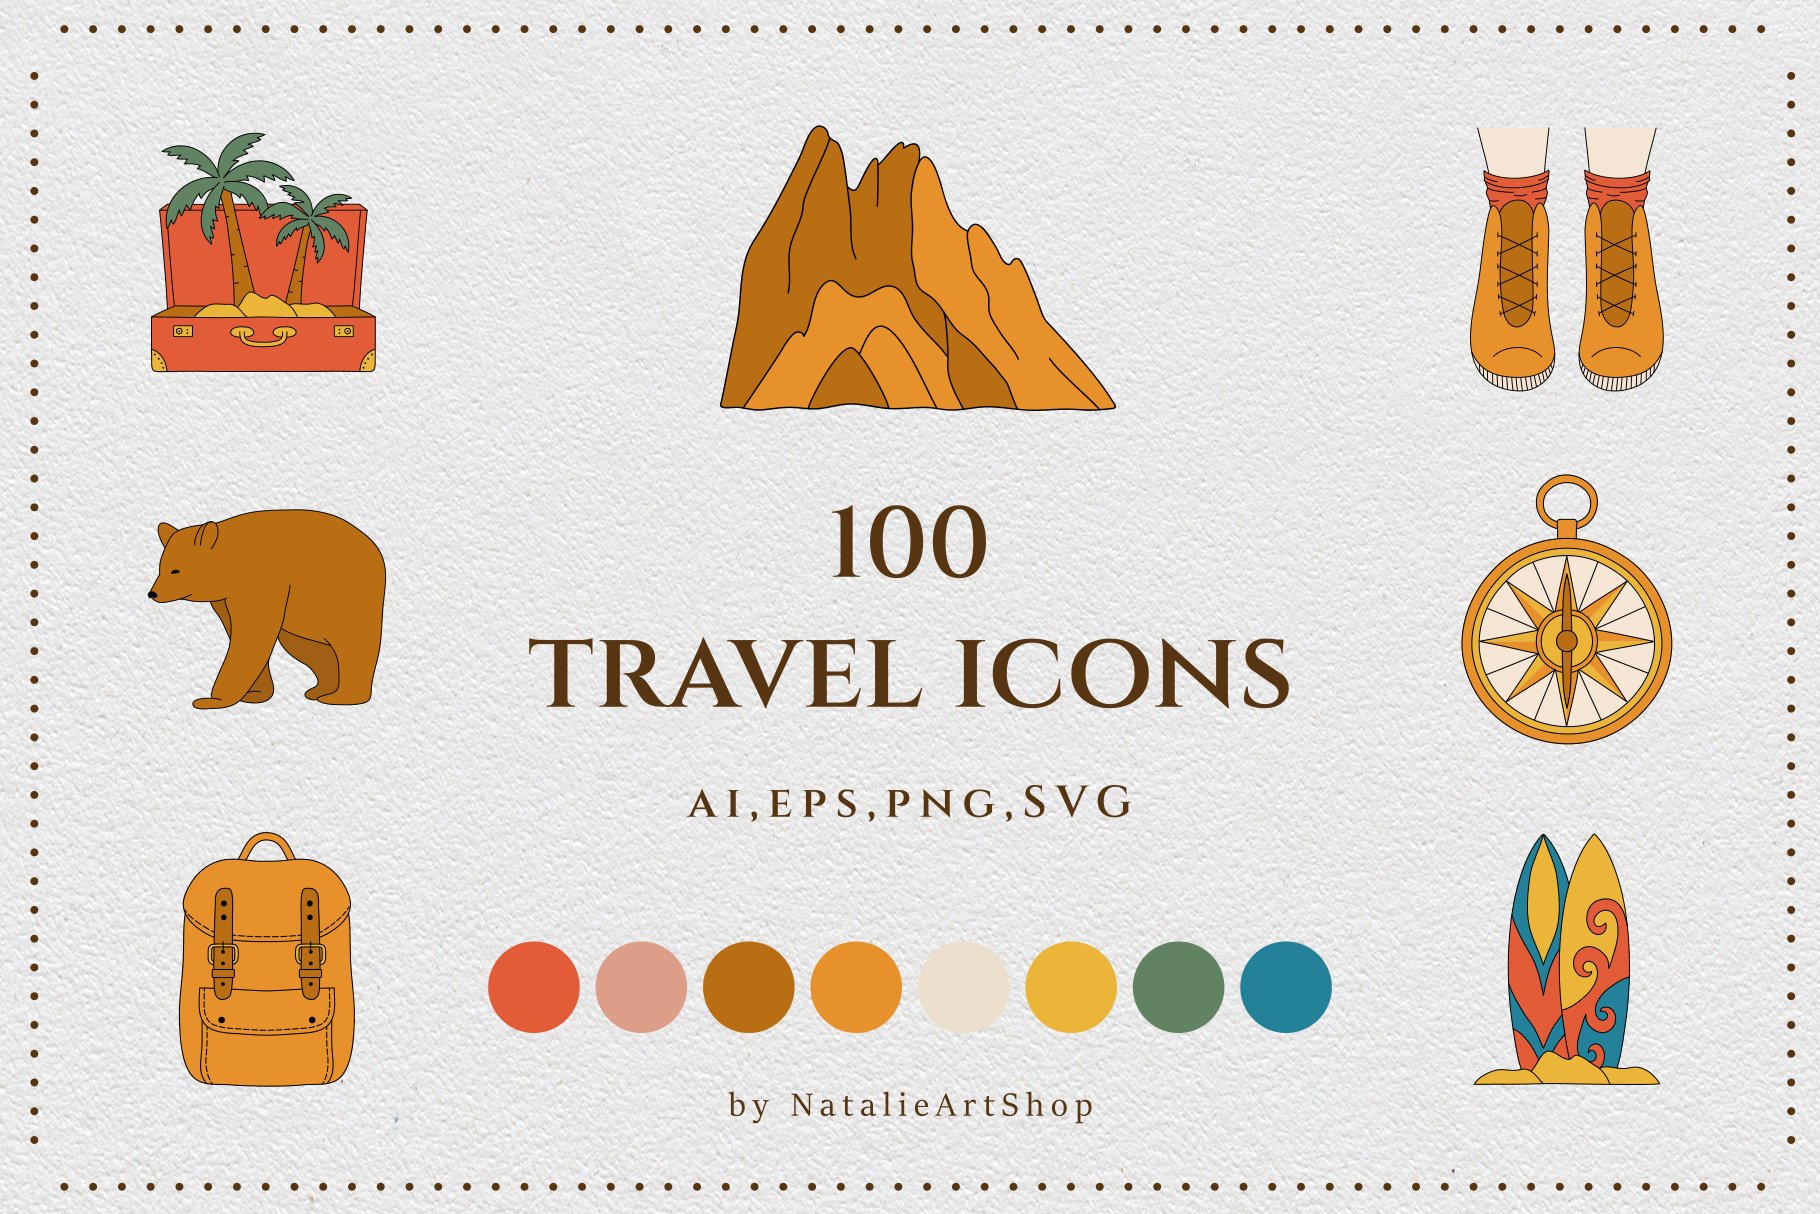 Travel icon set cover image.